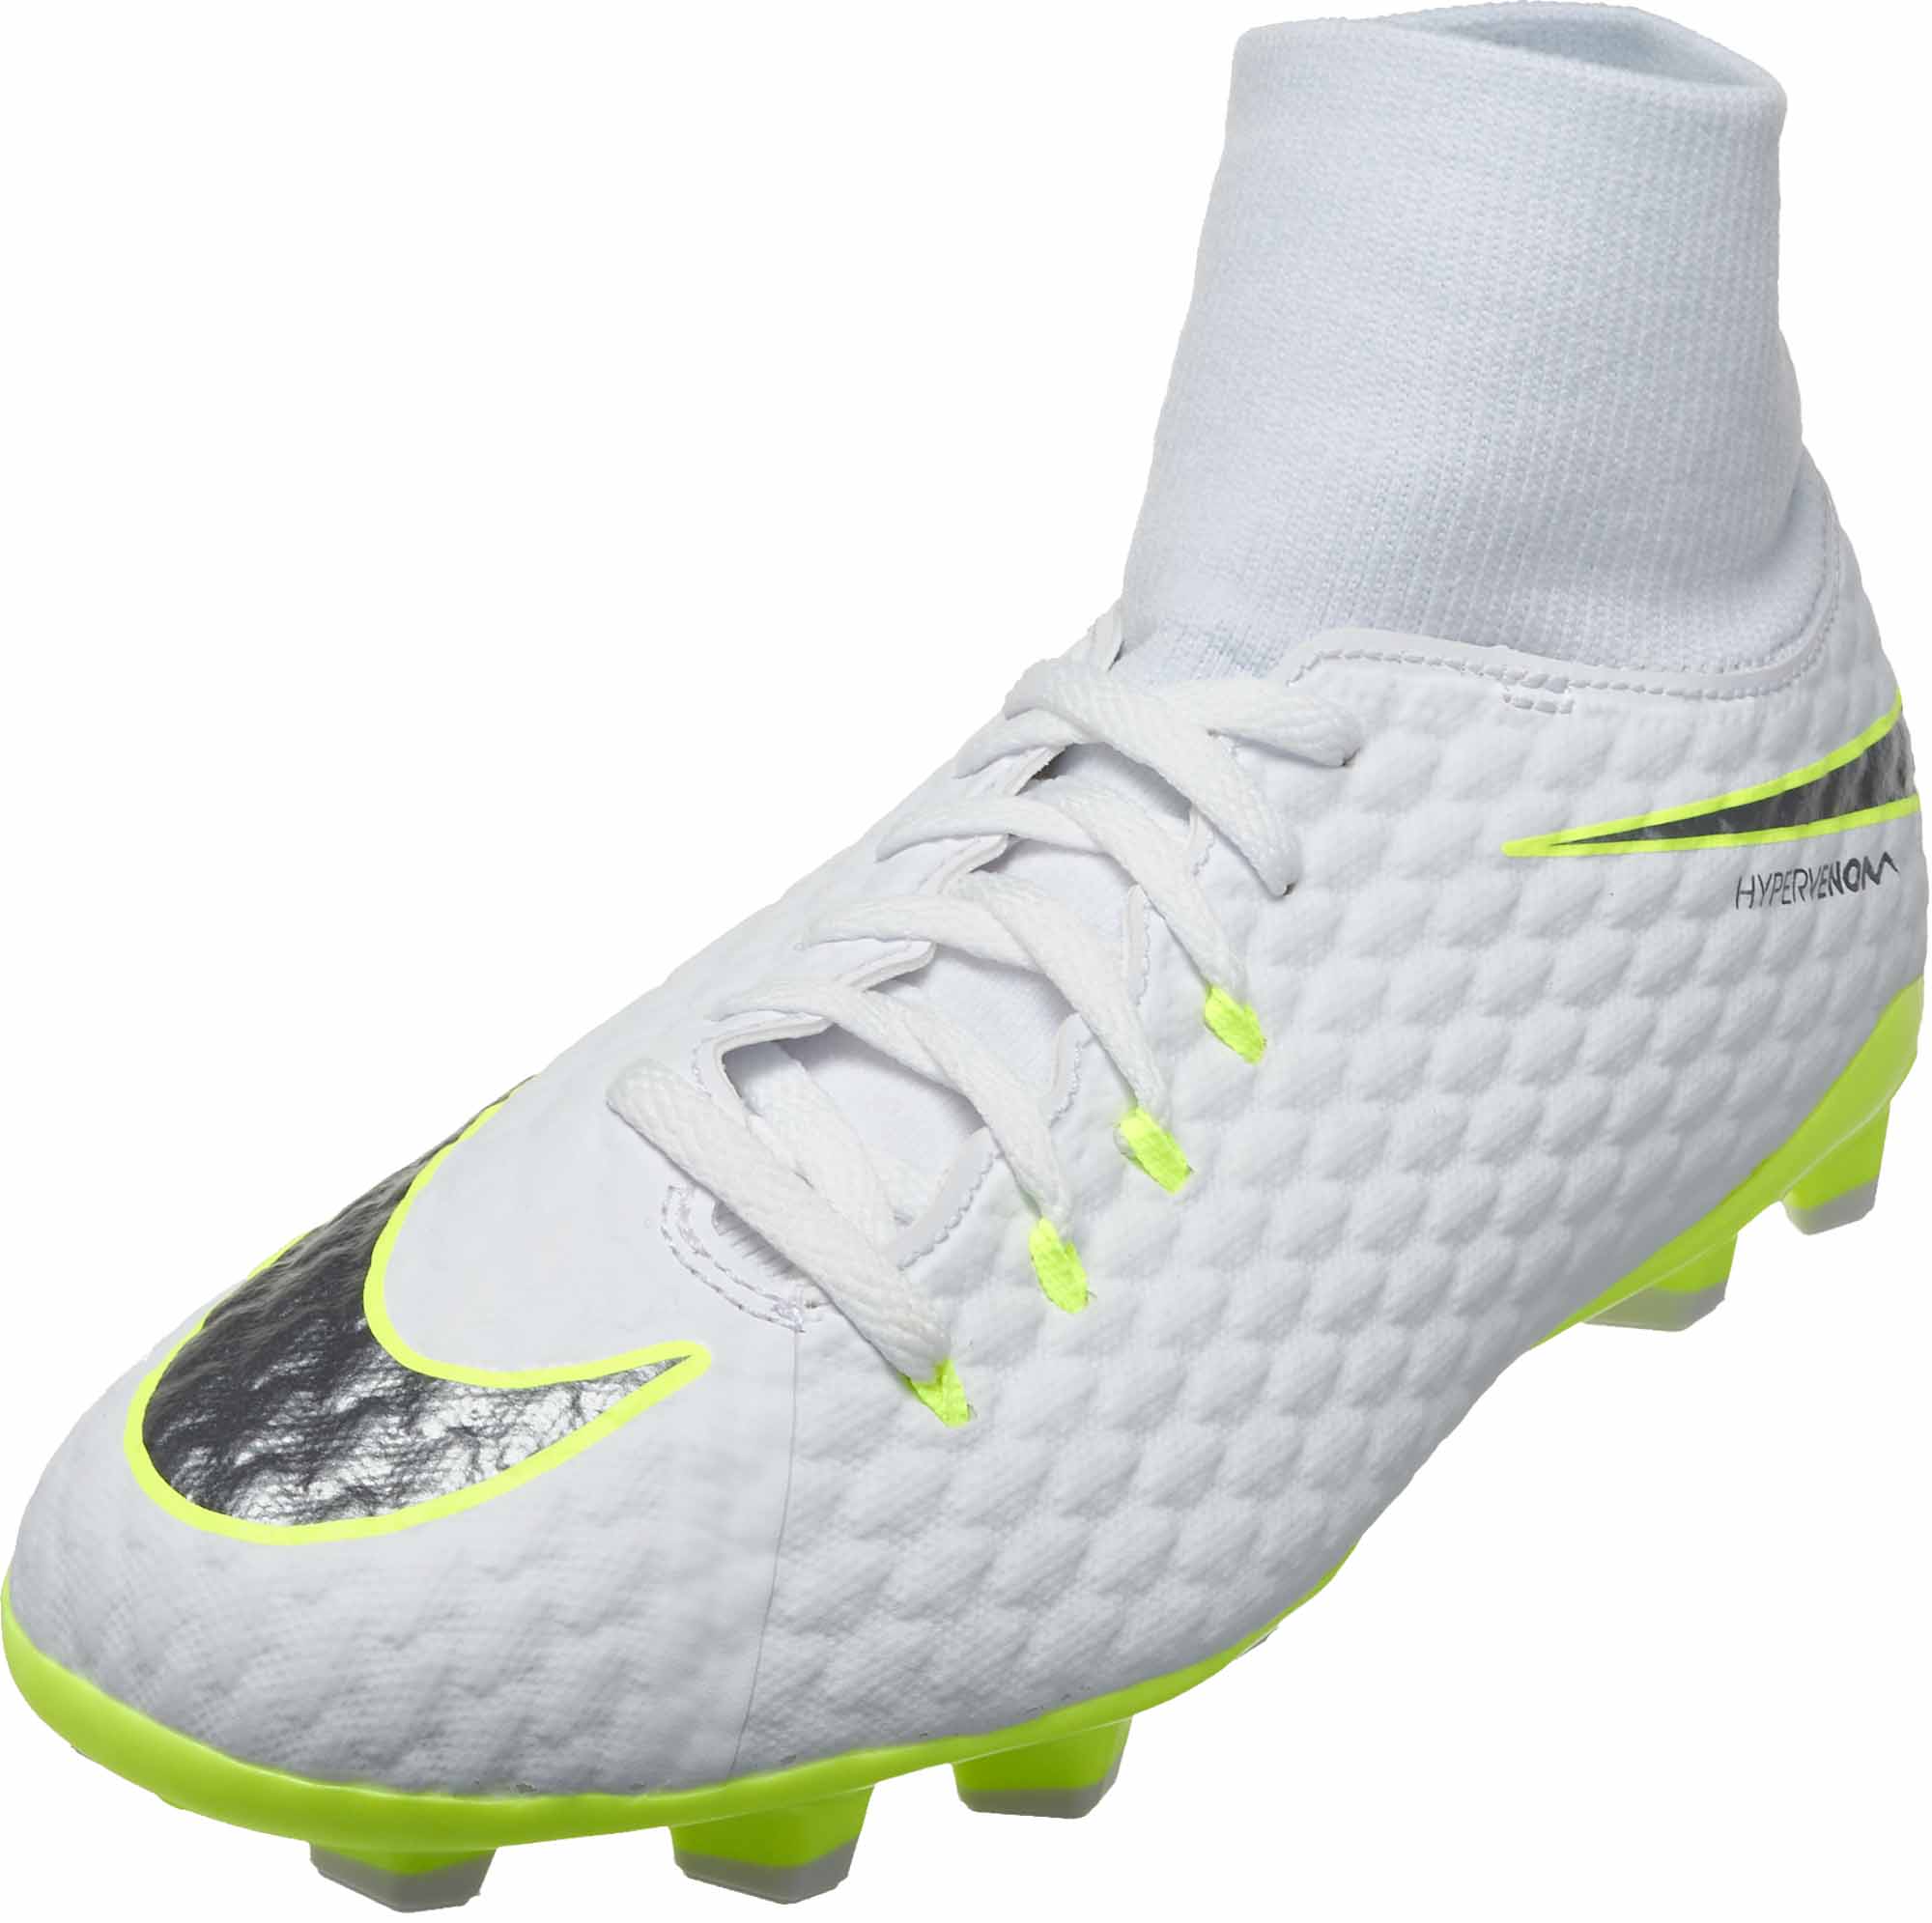 Nike Jr Hypervenomx Proximo TF, Chaussures de Football